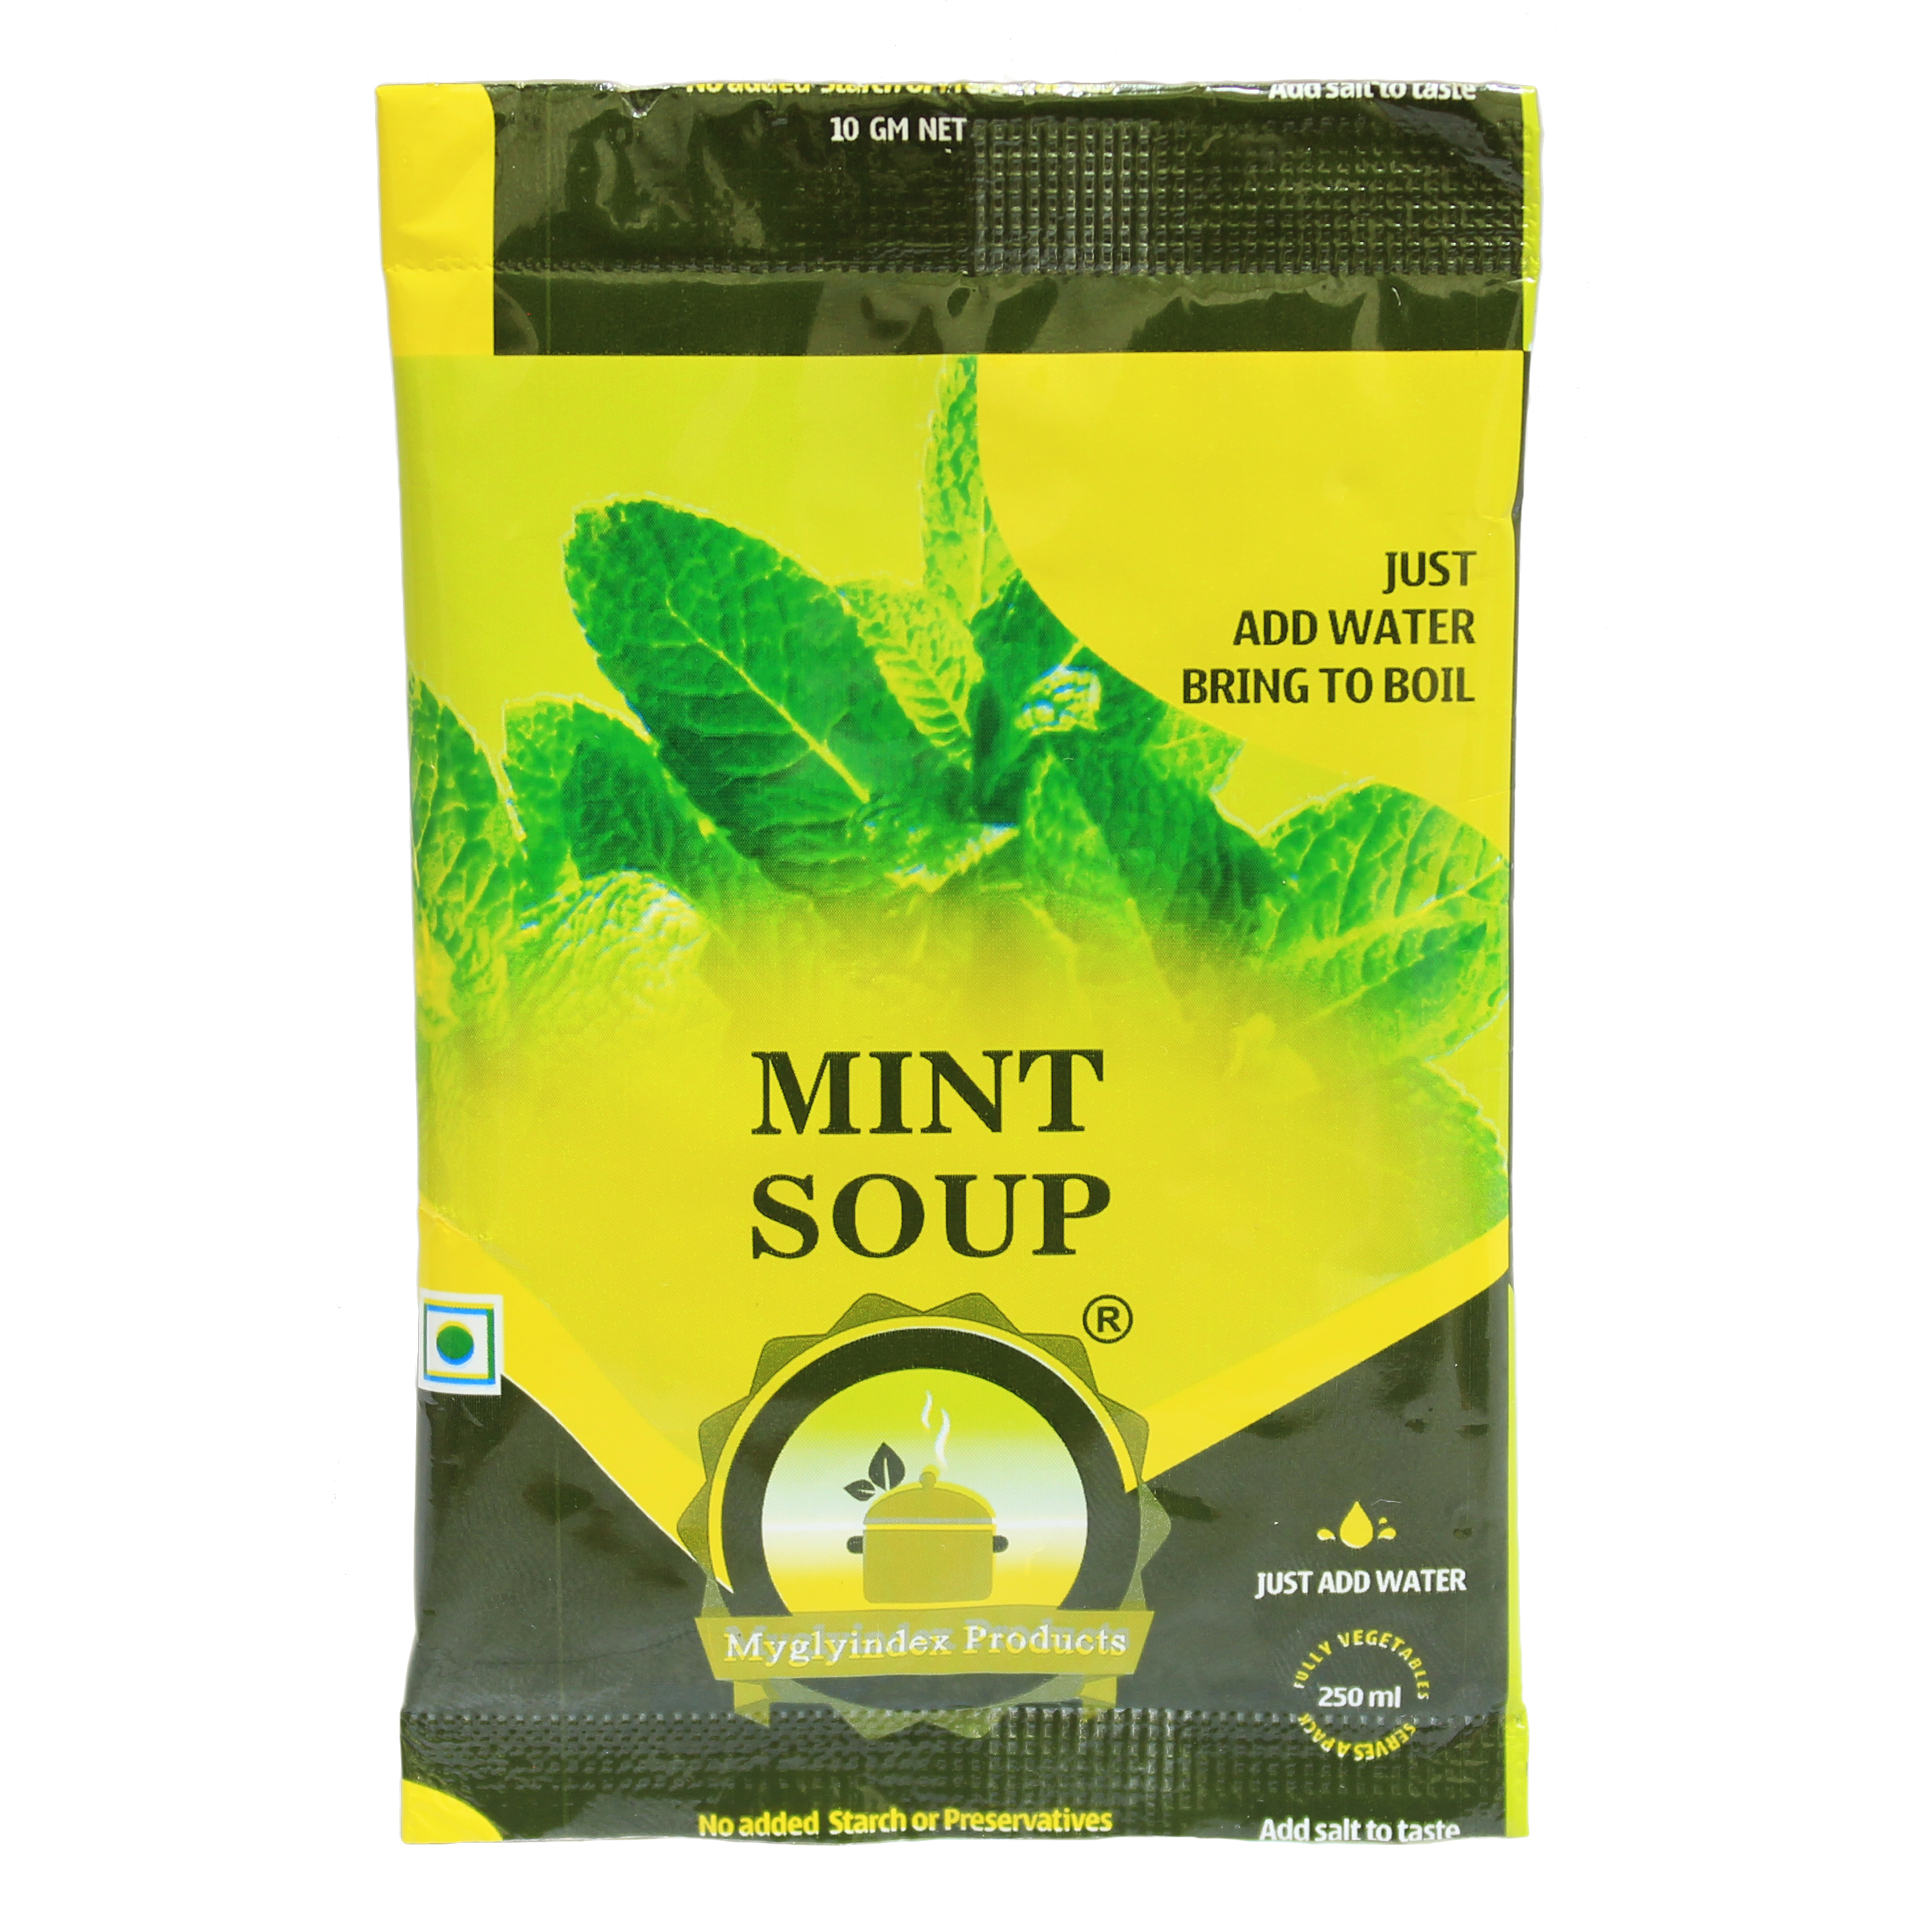 Buy Myglyindex Mint Soup (10Sachets) at Best Price Online